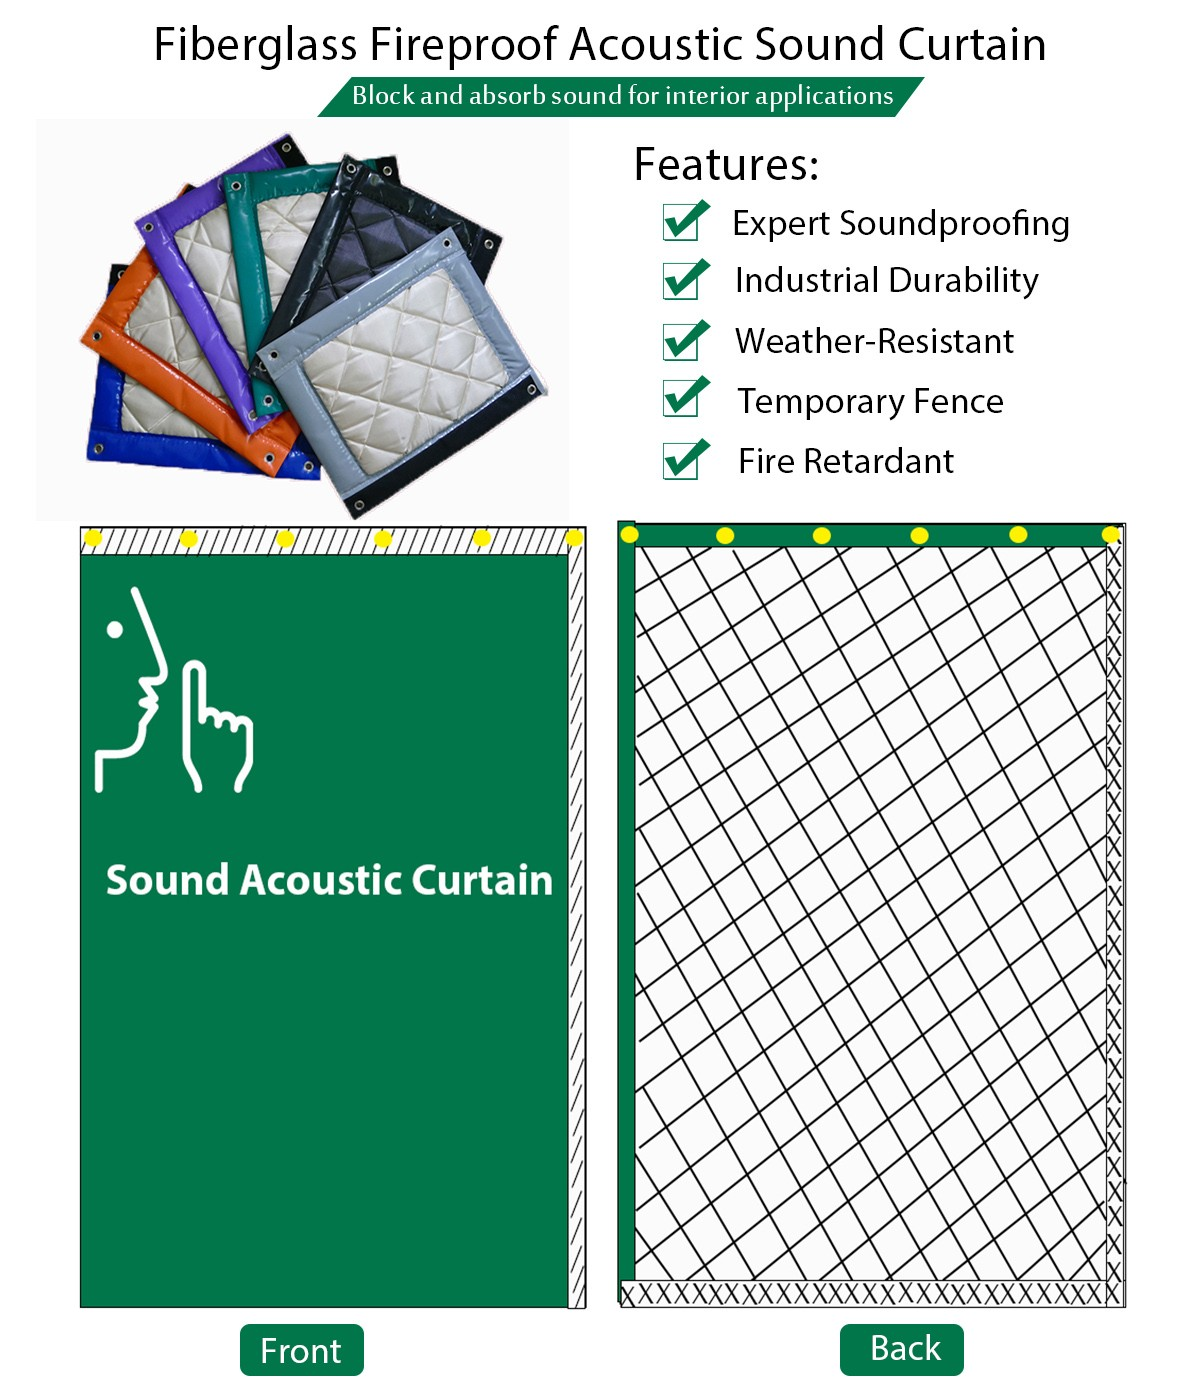 Fiberglass Fireproof Acoustic Sound Curtain